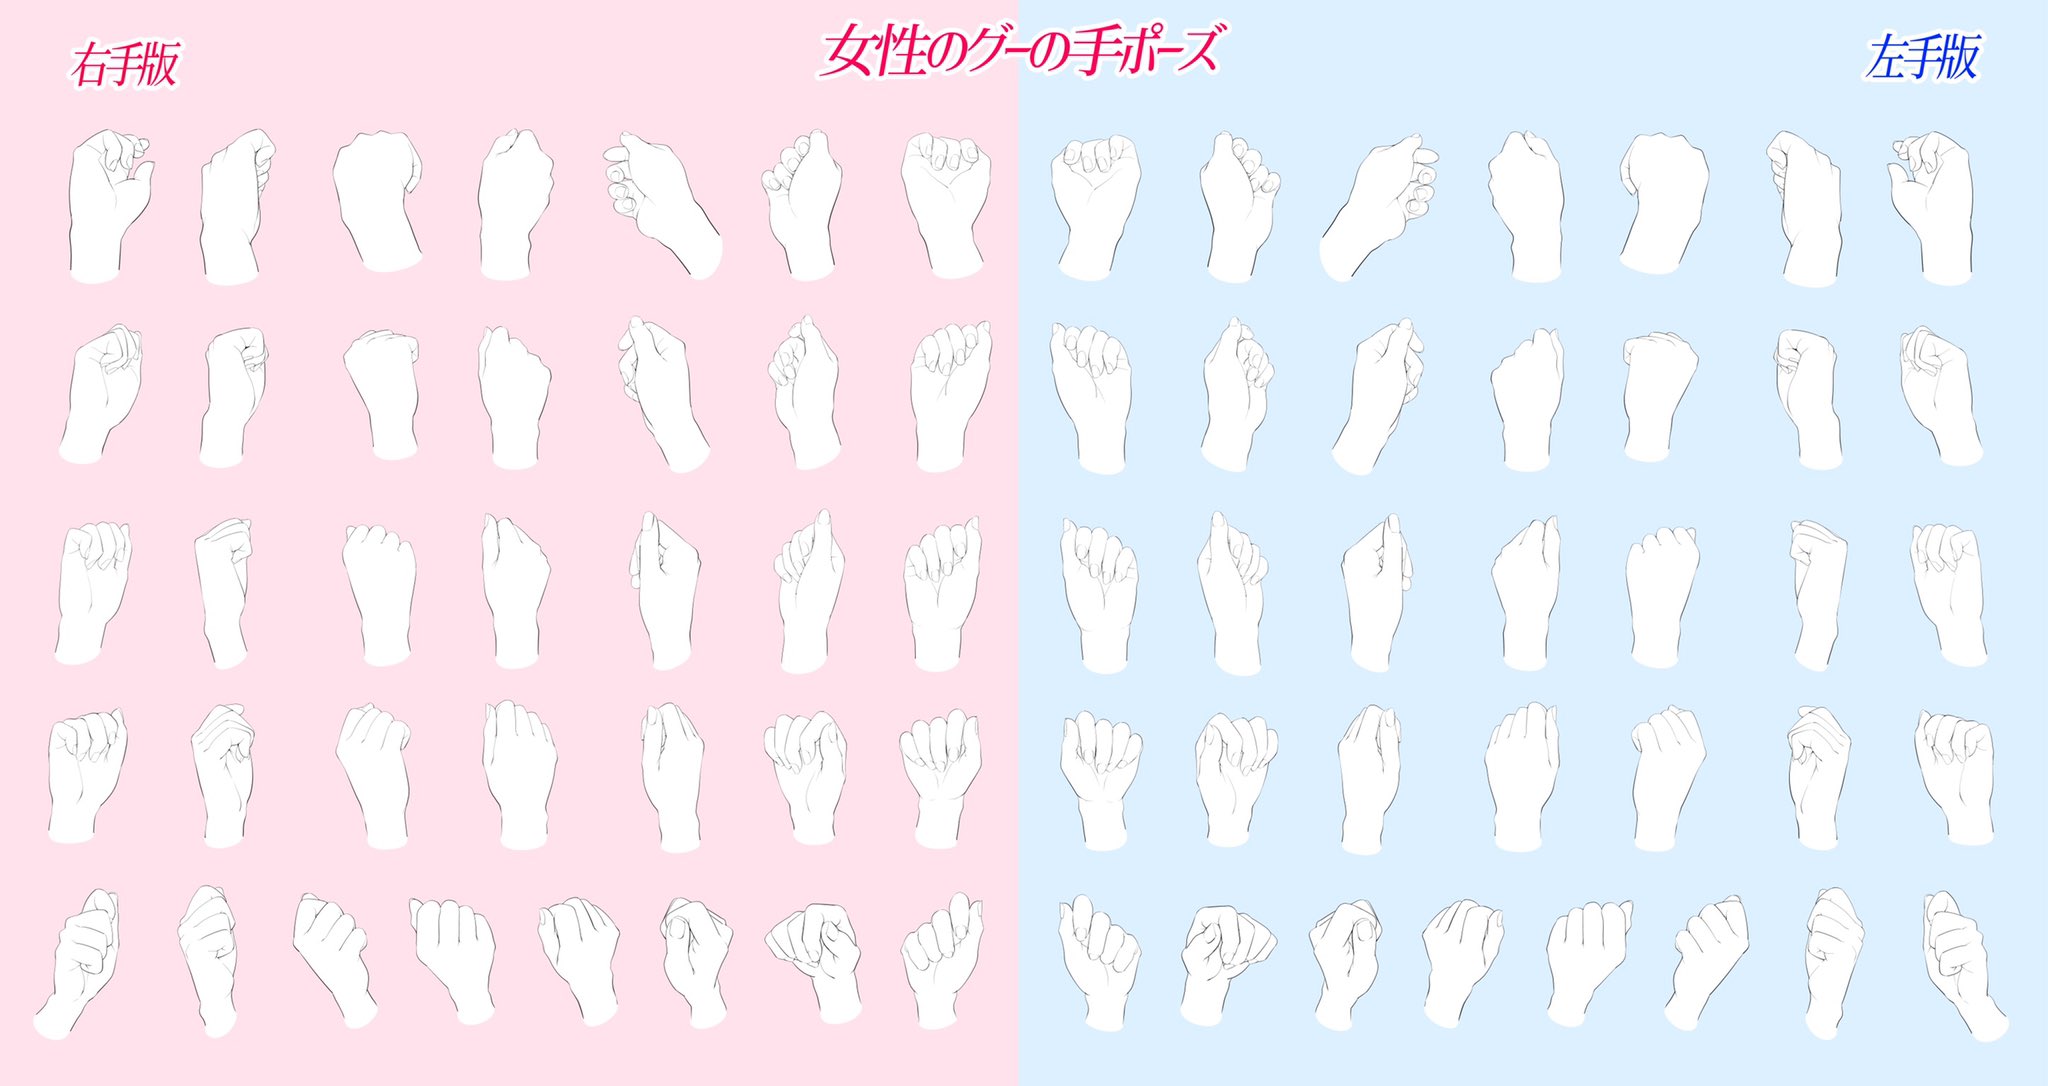 Twitter 上的 吉村拓也 イラスト講座 手のアングル素材 とは 男性 Amp 女性の 色んなポーズの手と色んな角度 を描いた素材 全452構図 です データは合計5ページ パー 型 グー 型 手話ポーズ型 すべて合わせて452構図の素材です